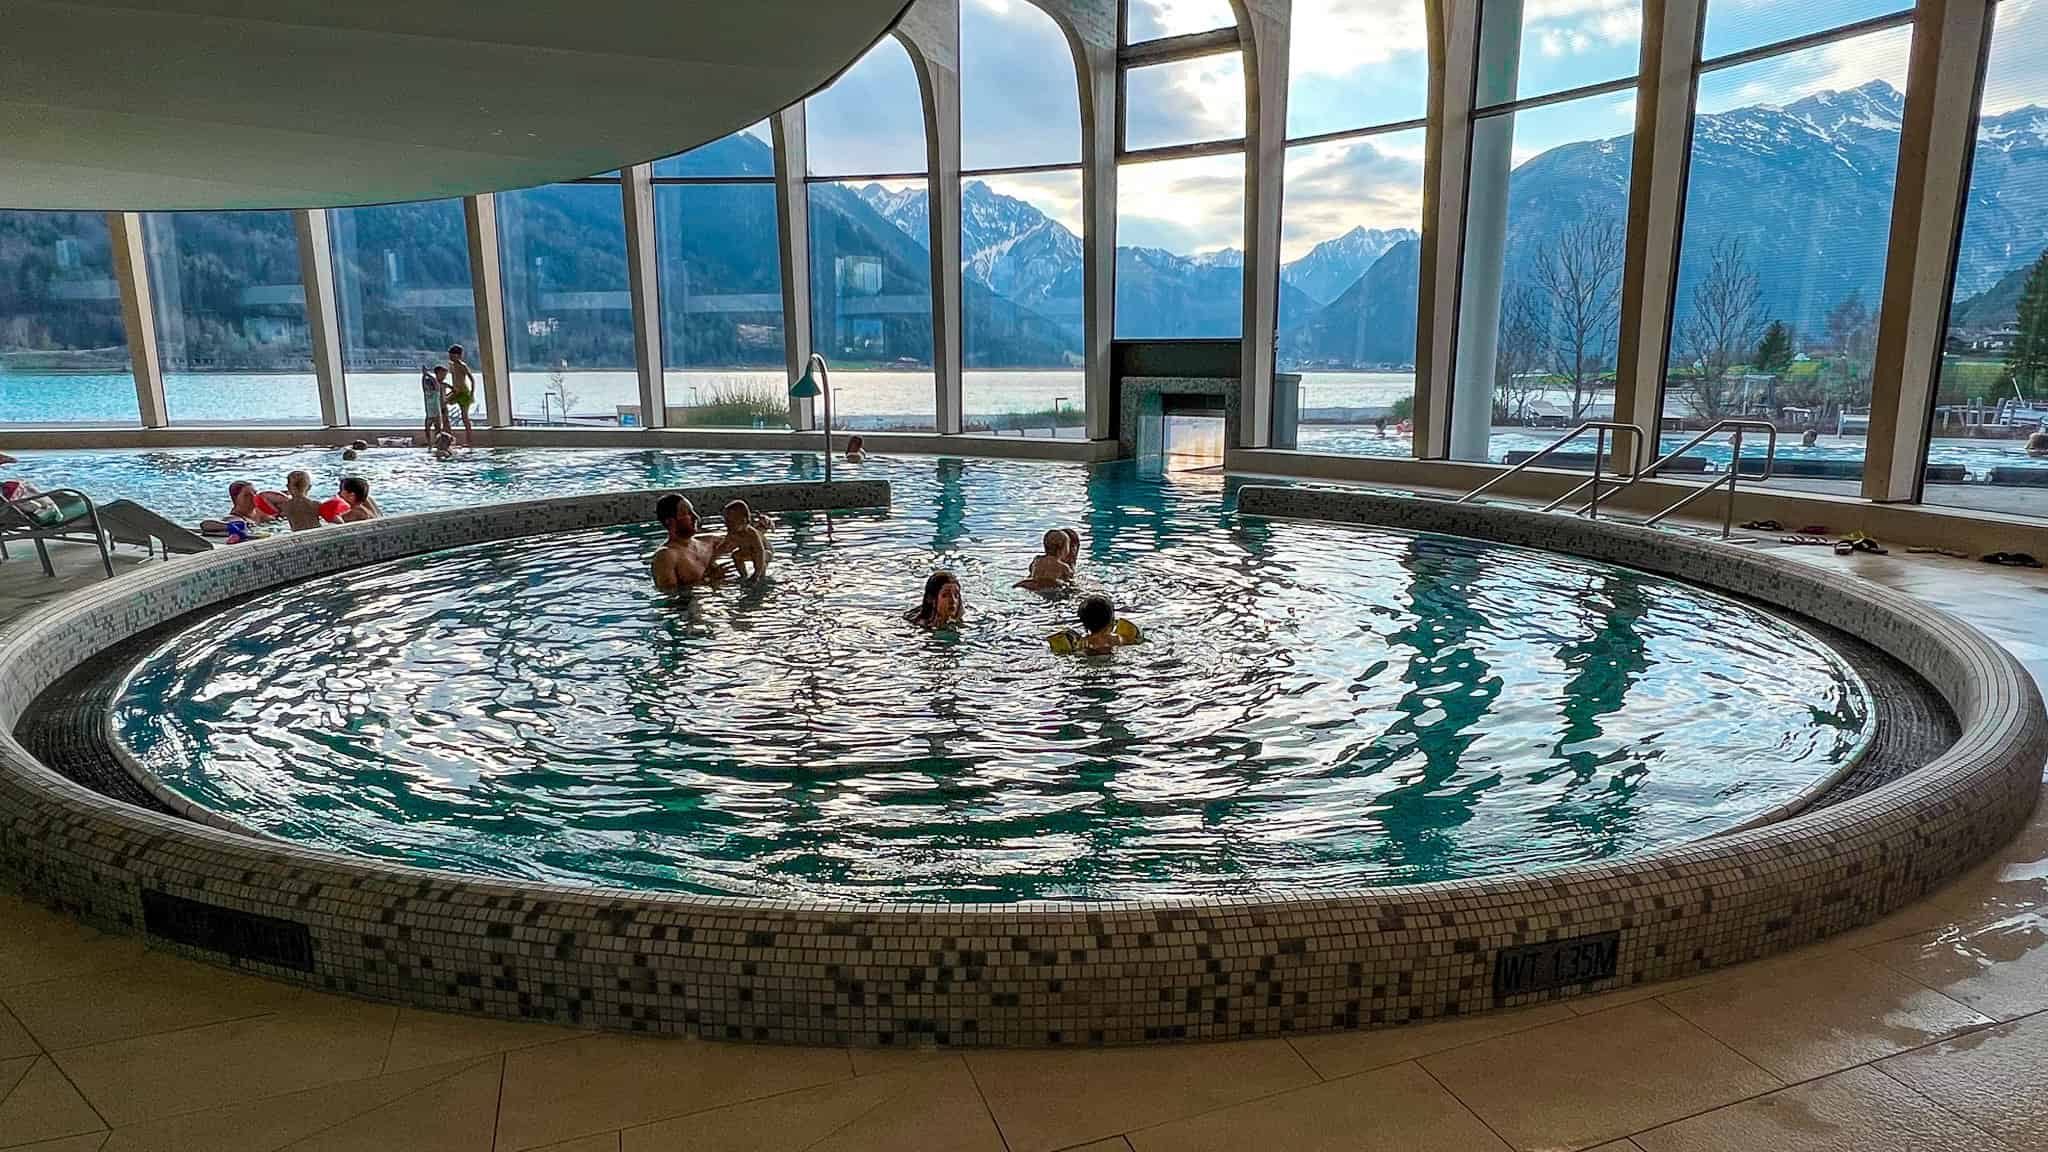 Achensee public pool - luxury spring break destinations for families